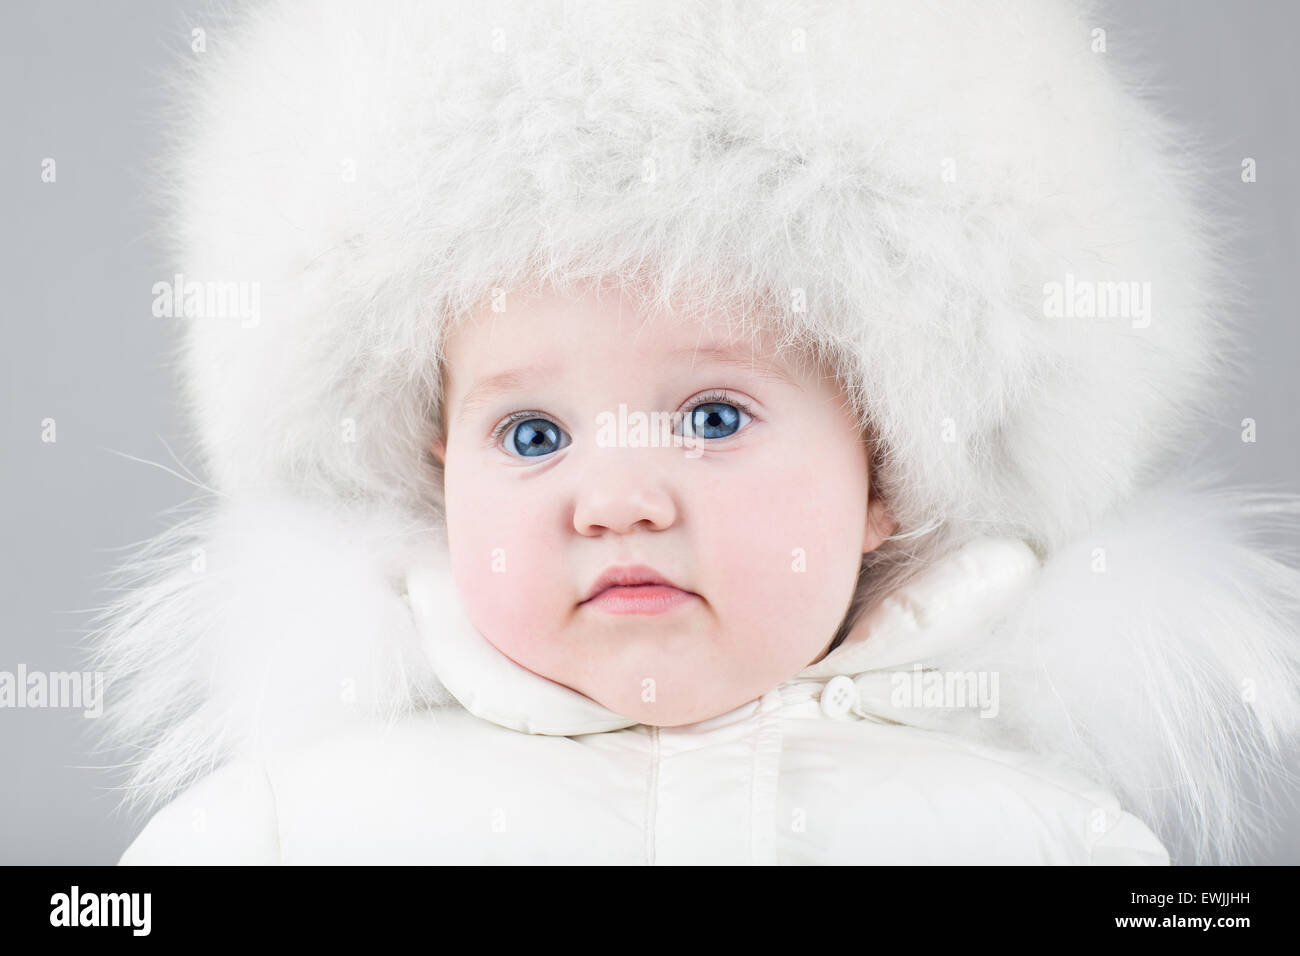 baby russian fur hat